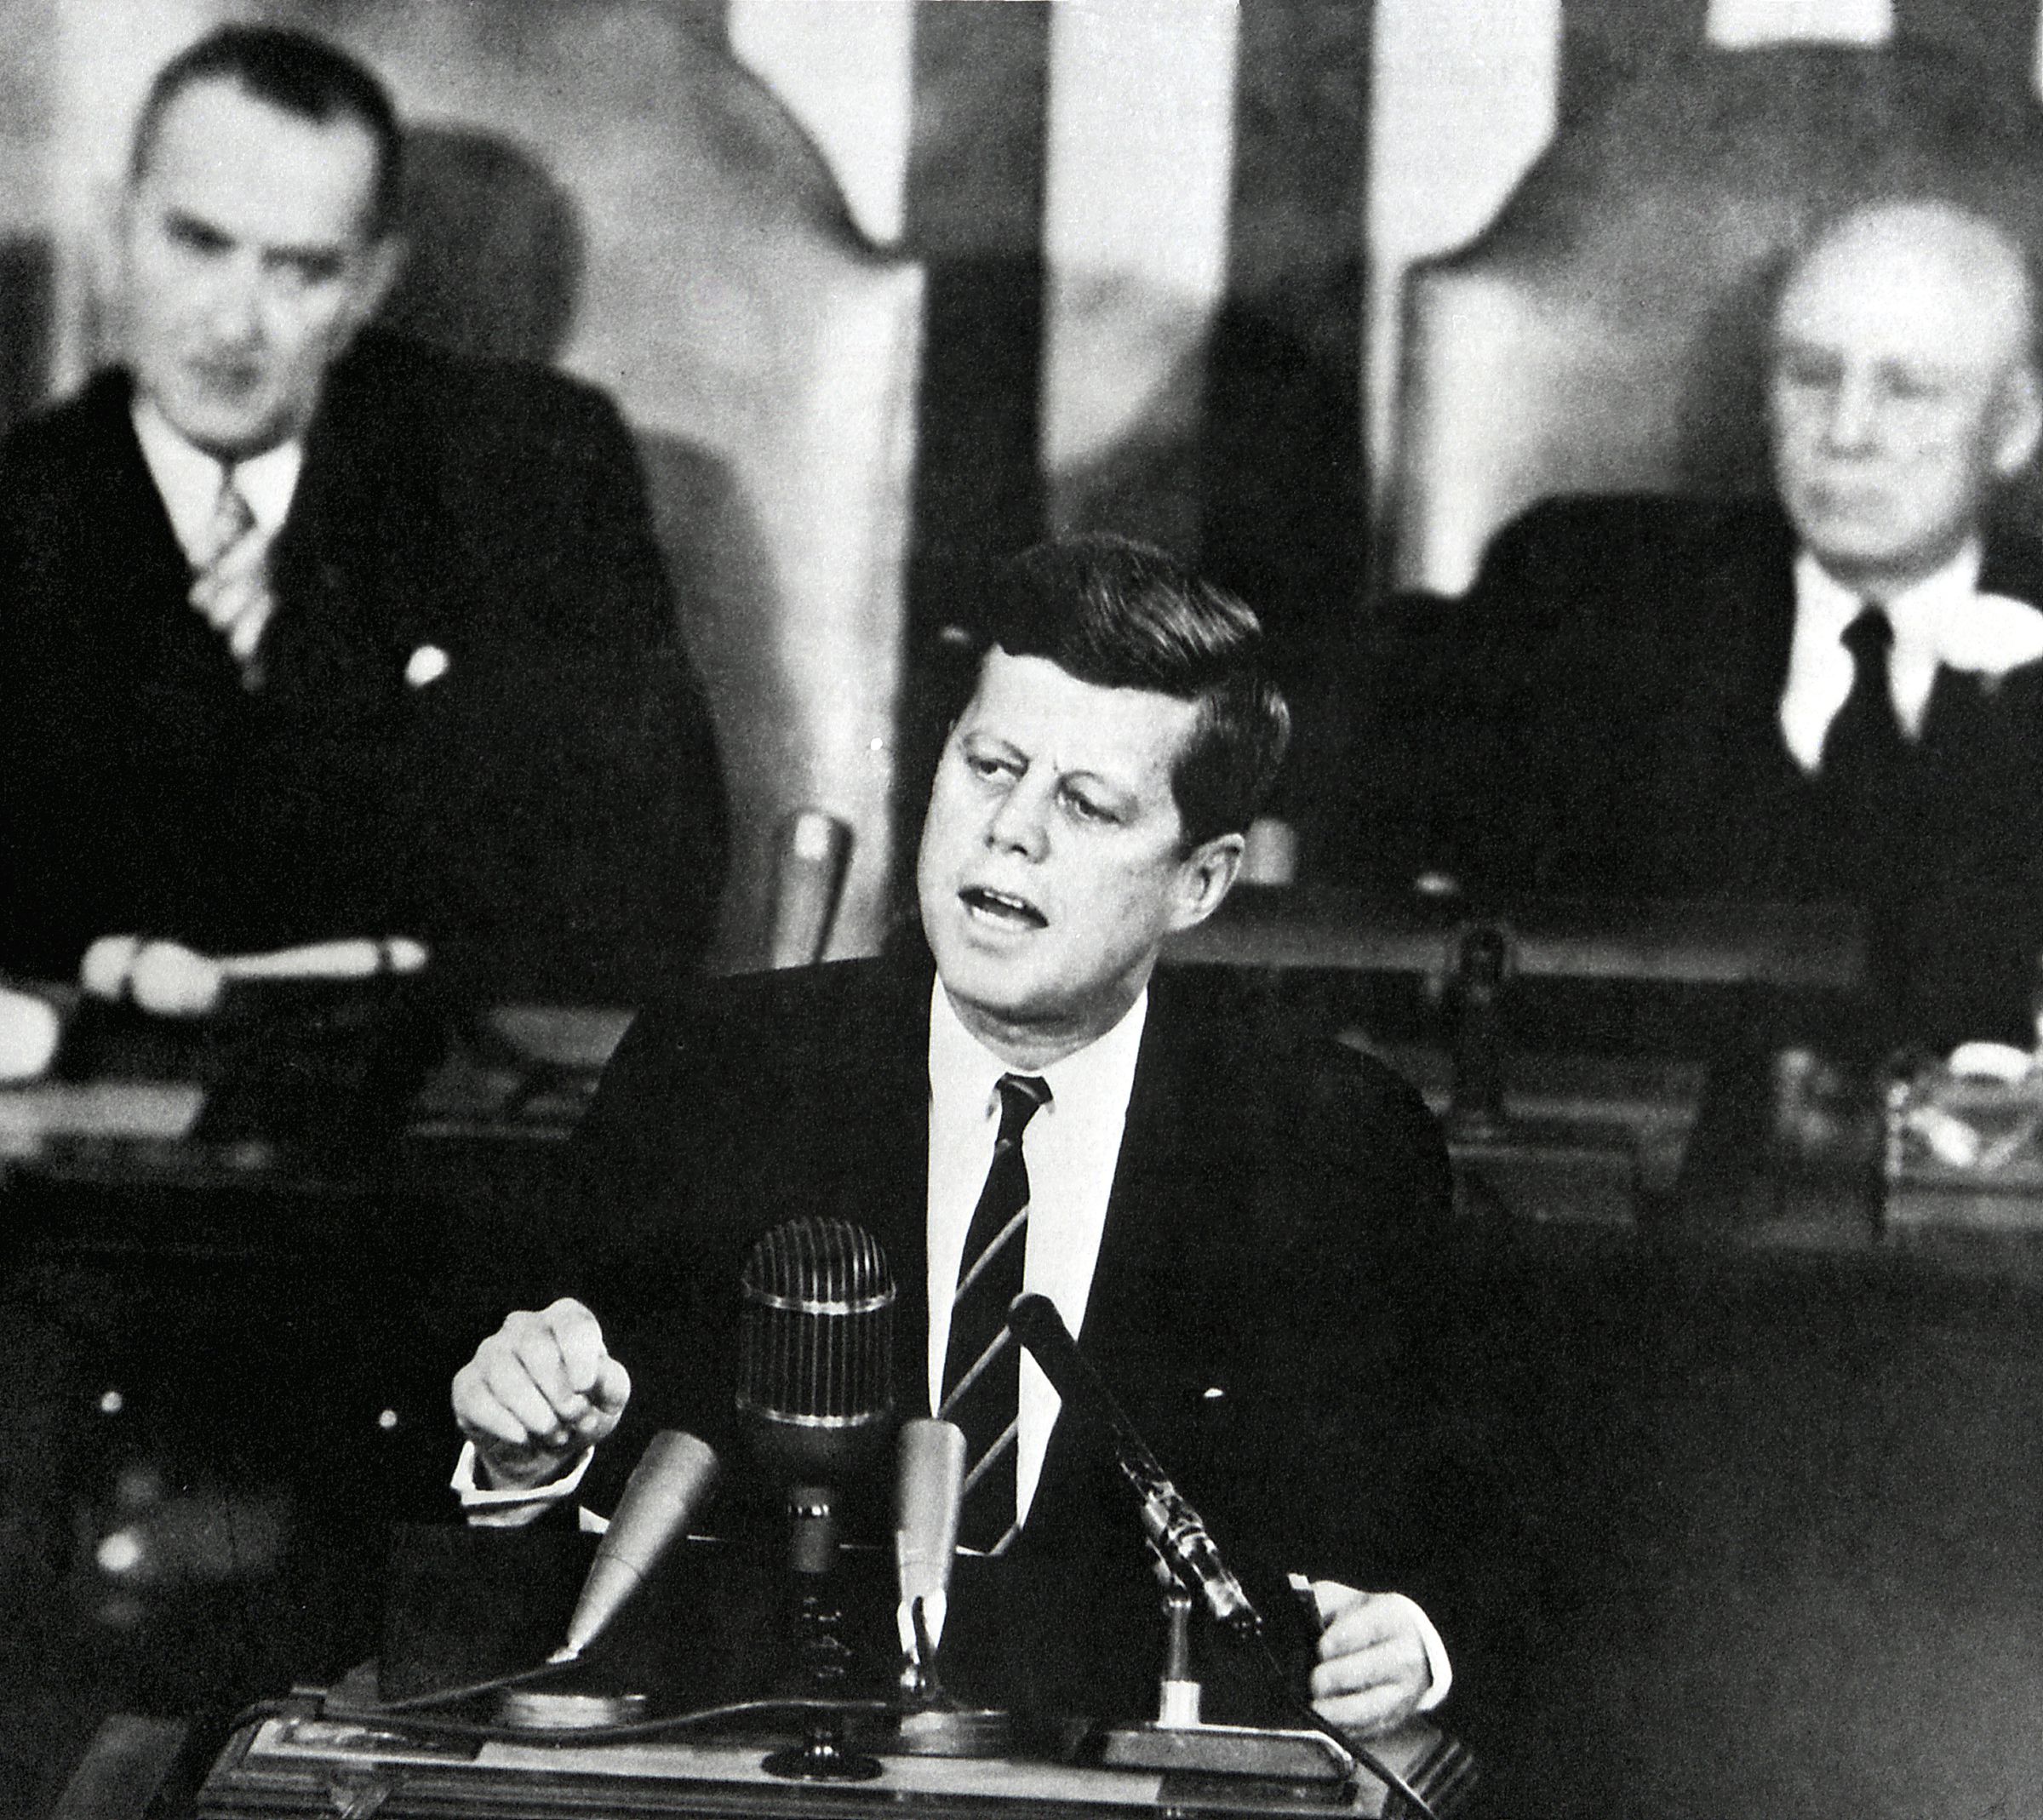 President Kennedy addressing Congress in 1961.